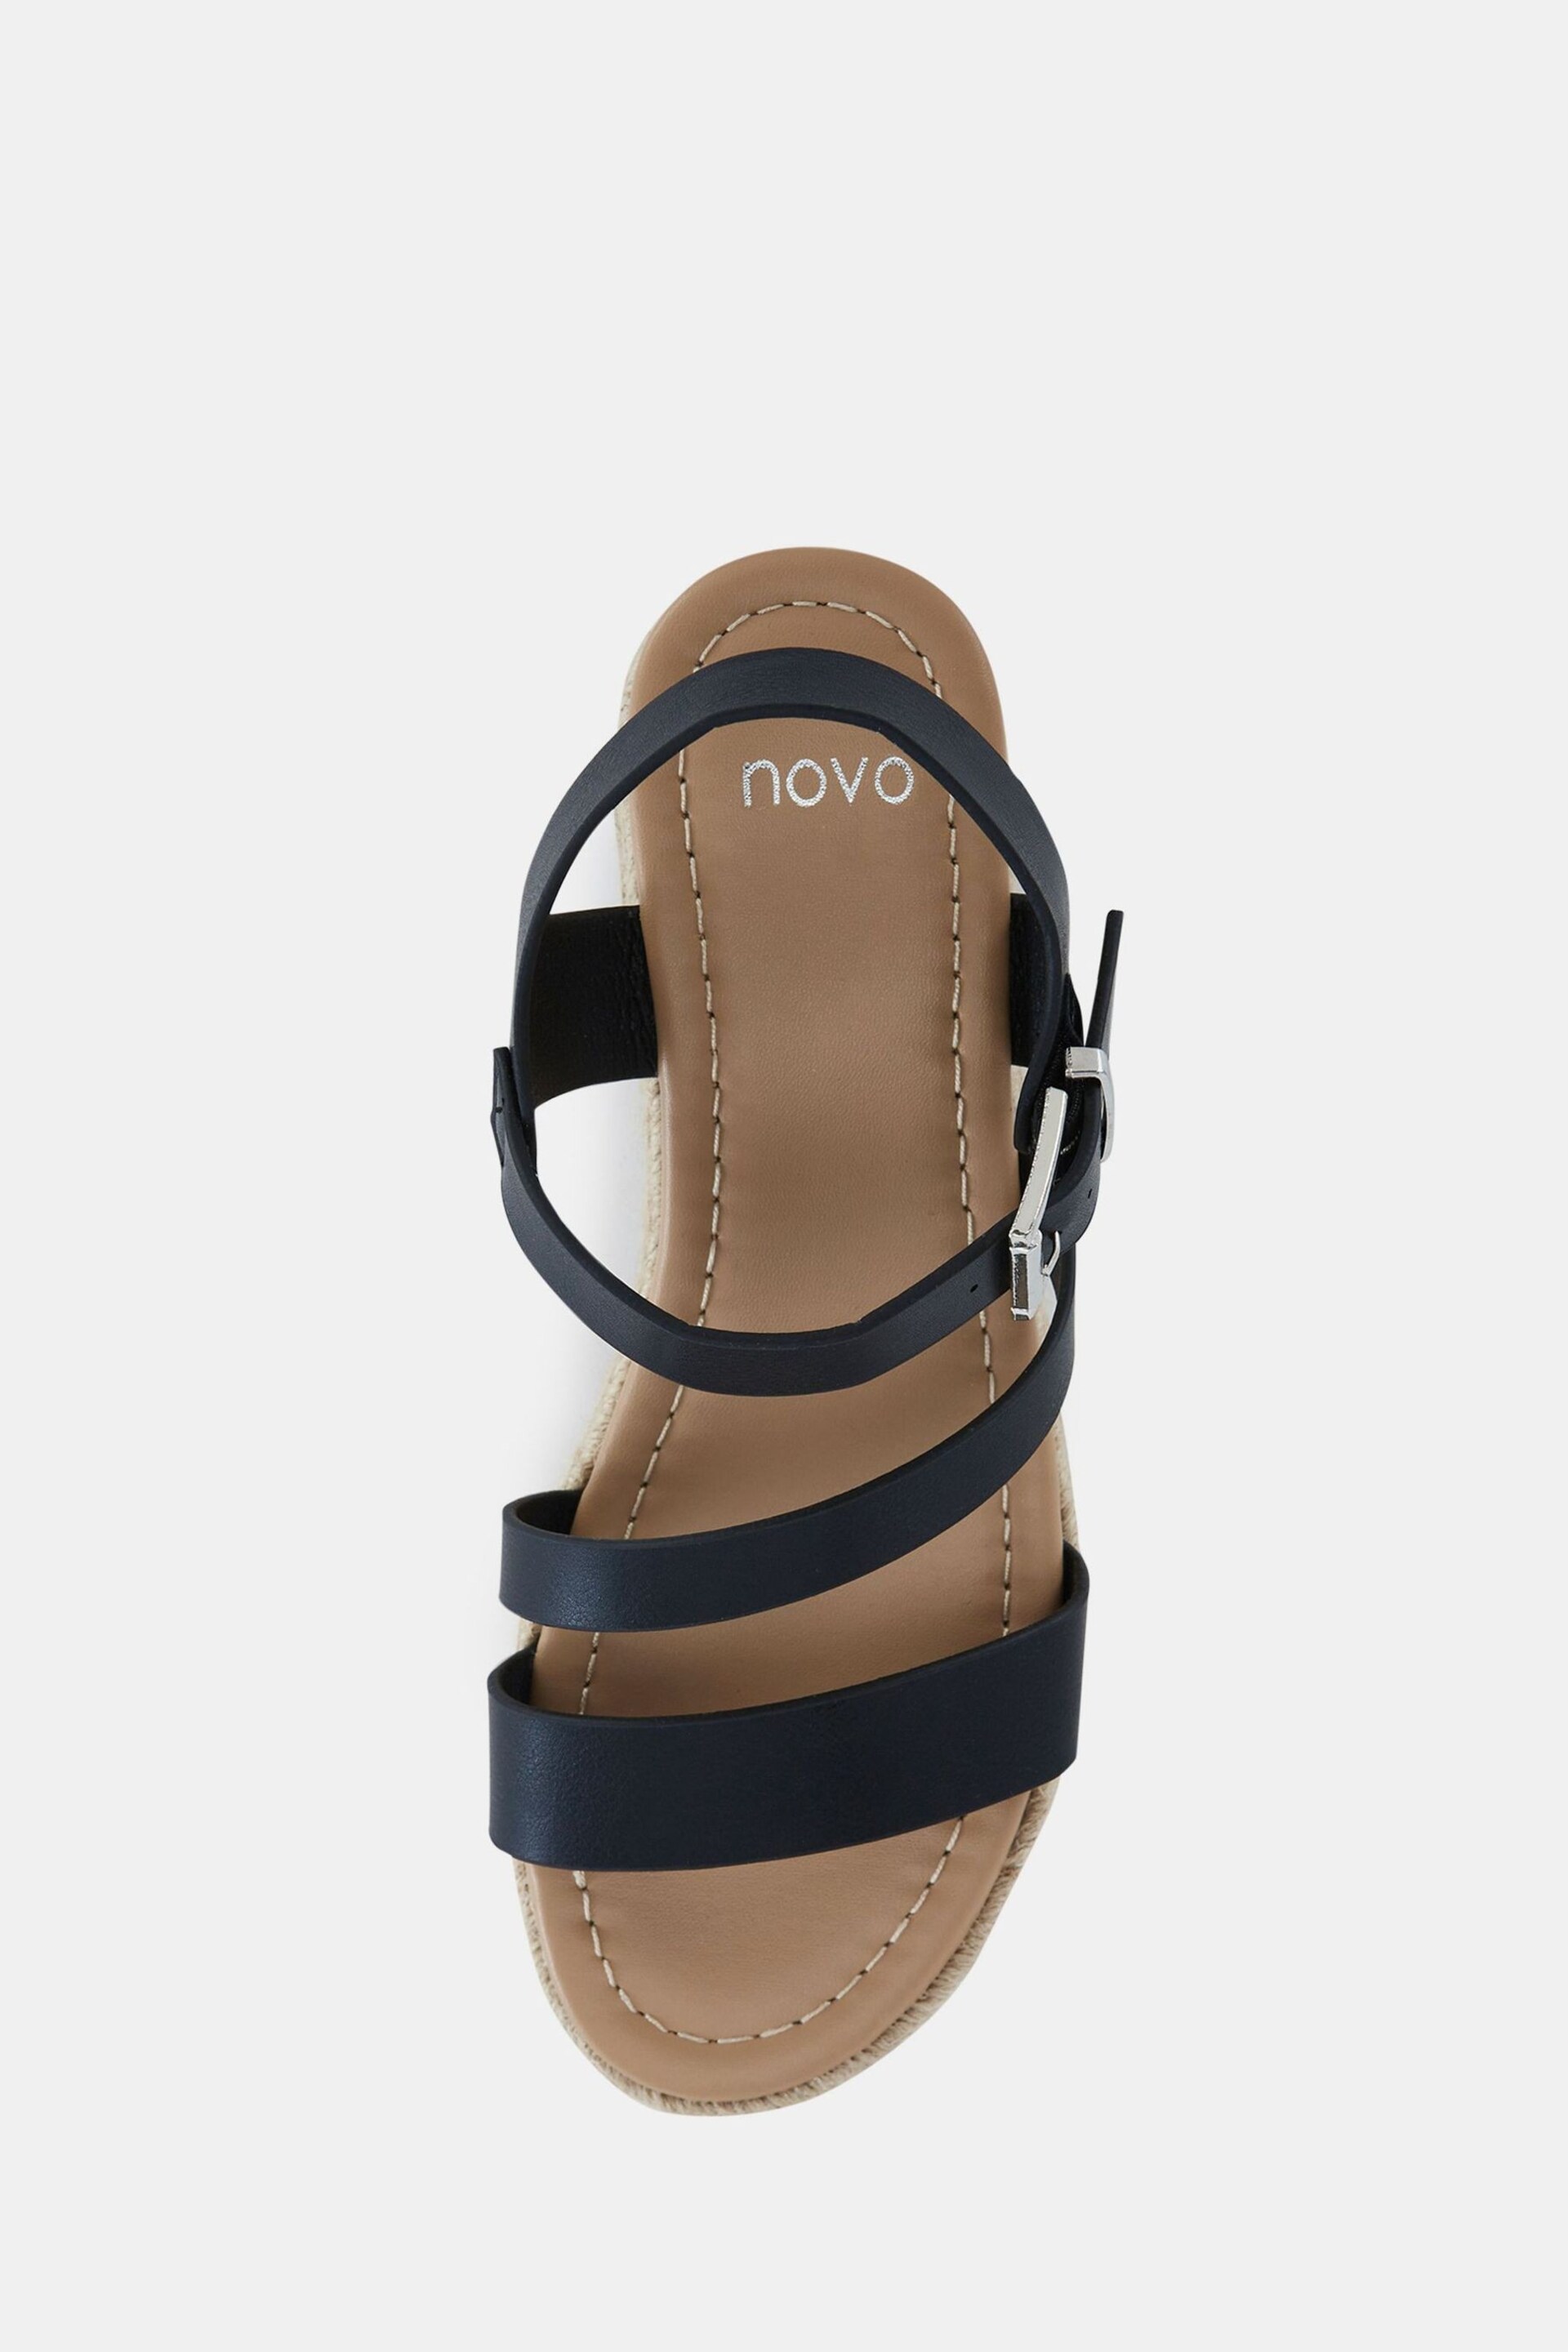 Novo Black Regular Fit SIMBA Espadrille Strappy Sandals - Image 5 of 6